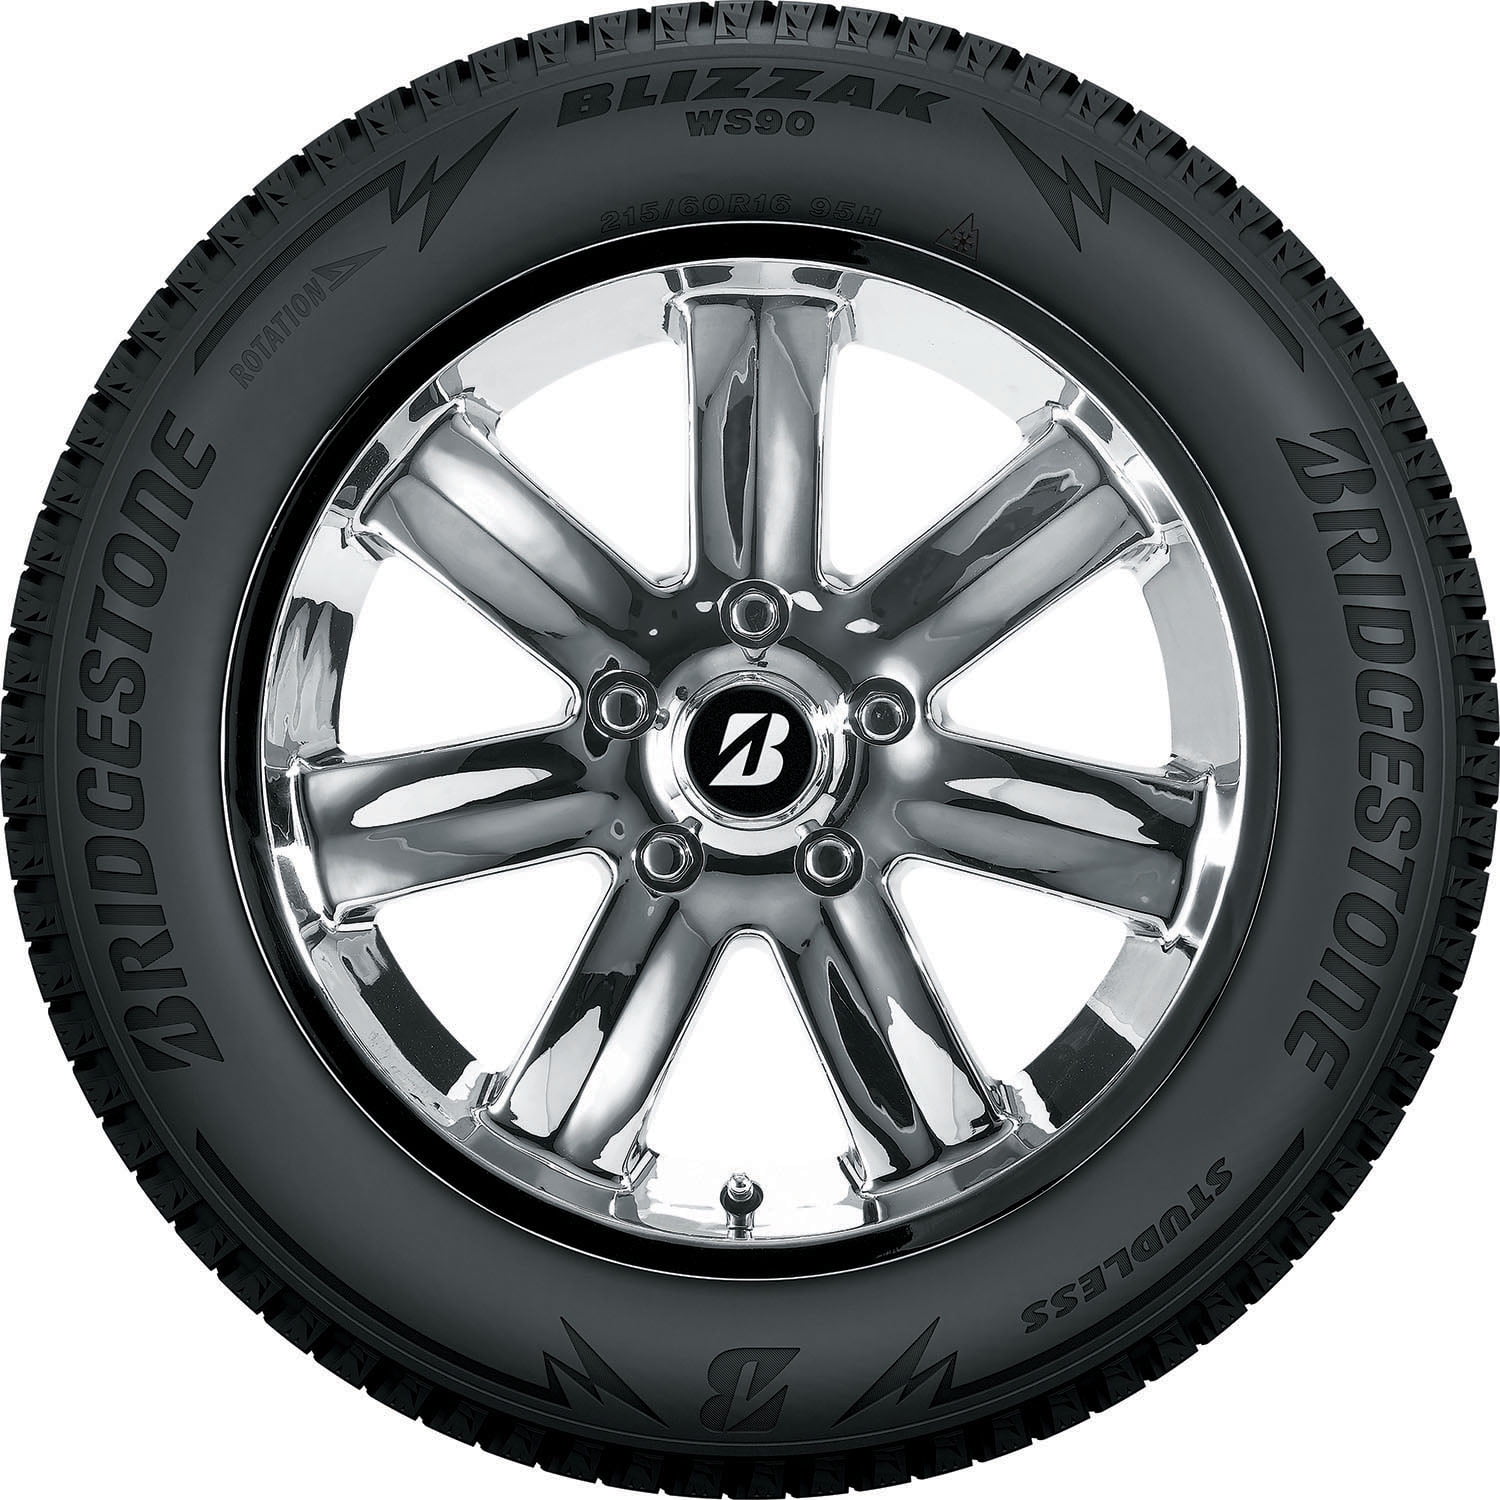 Bridgestone Blizzak WS90 Winter 215/60R17 96T Passenger Tire